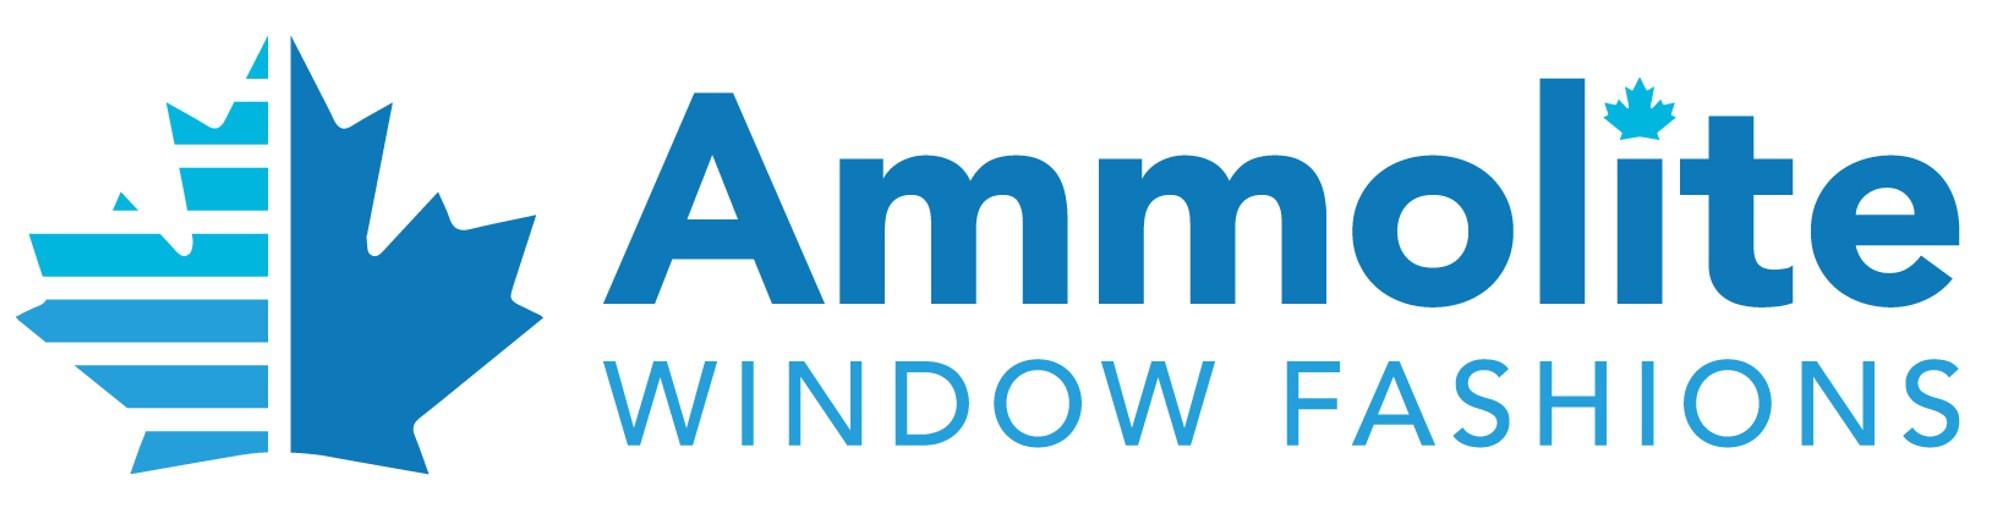 Ammolite Window Fashions